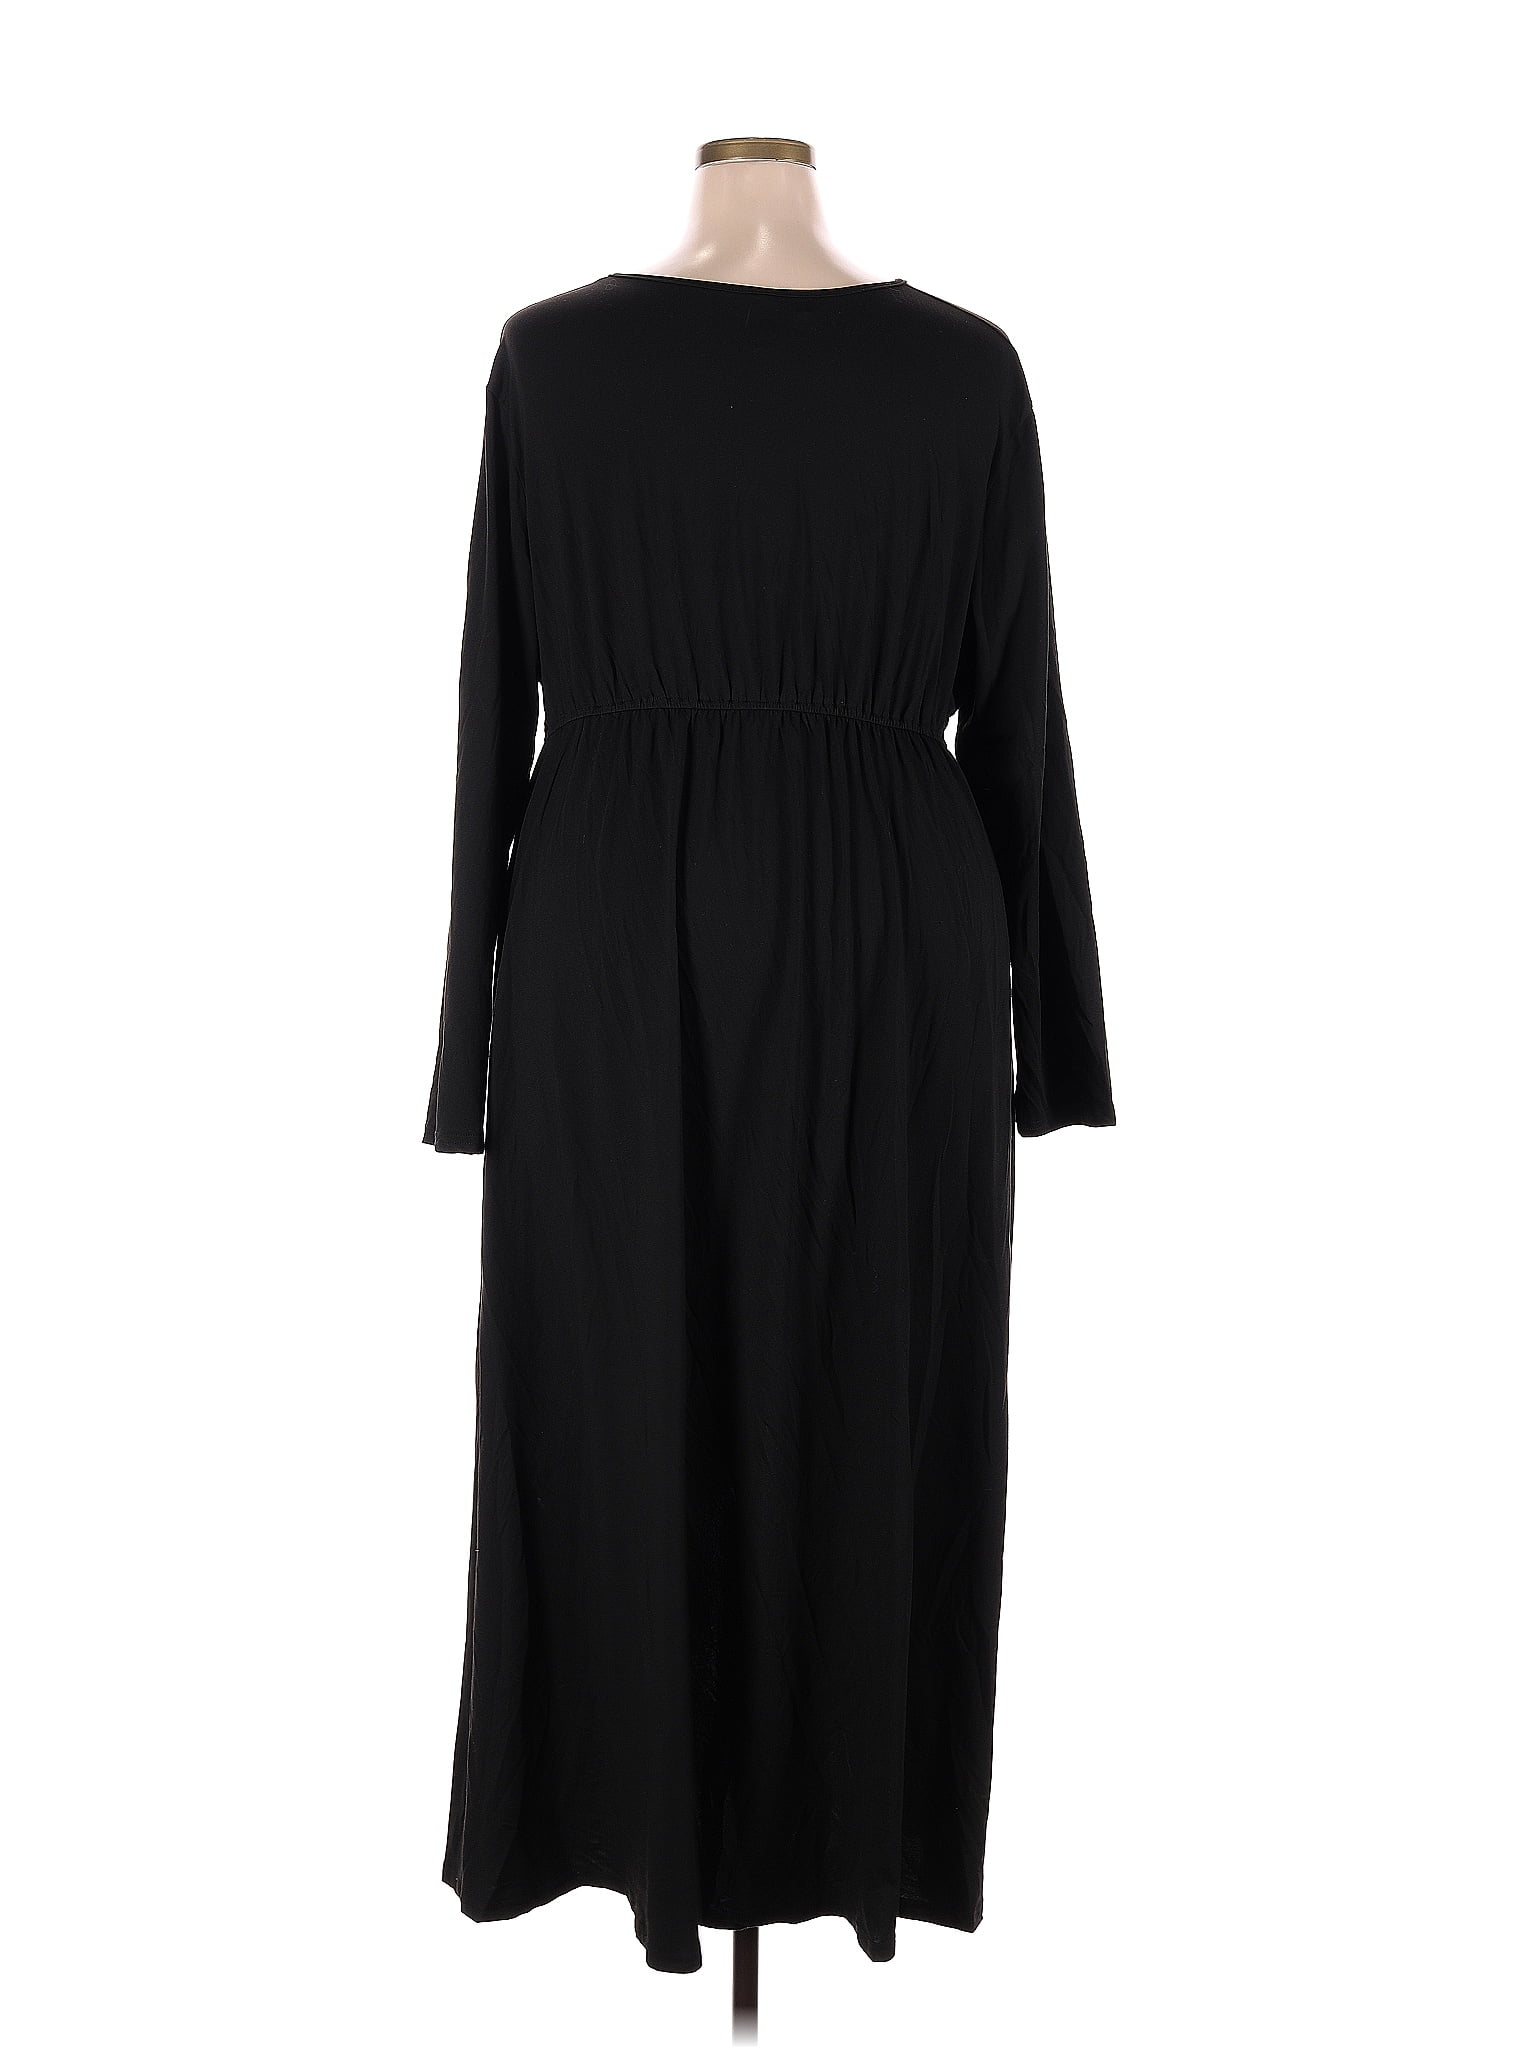 ALLEGRACE Plus Size Tops for Women Long Sleeve Fall Ruffle Mesh Dressy  Tunic Shirts Black 2X at  Women's Clothing store